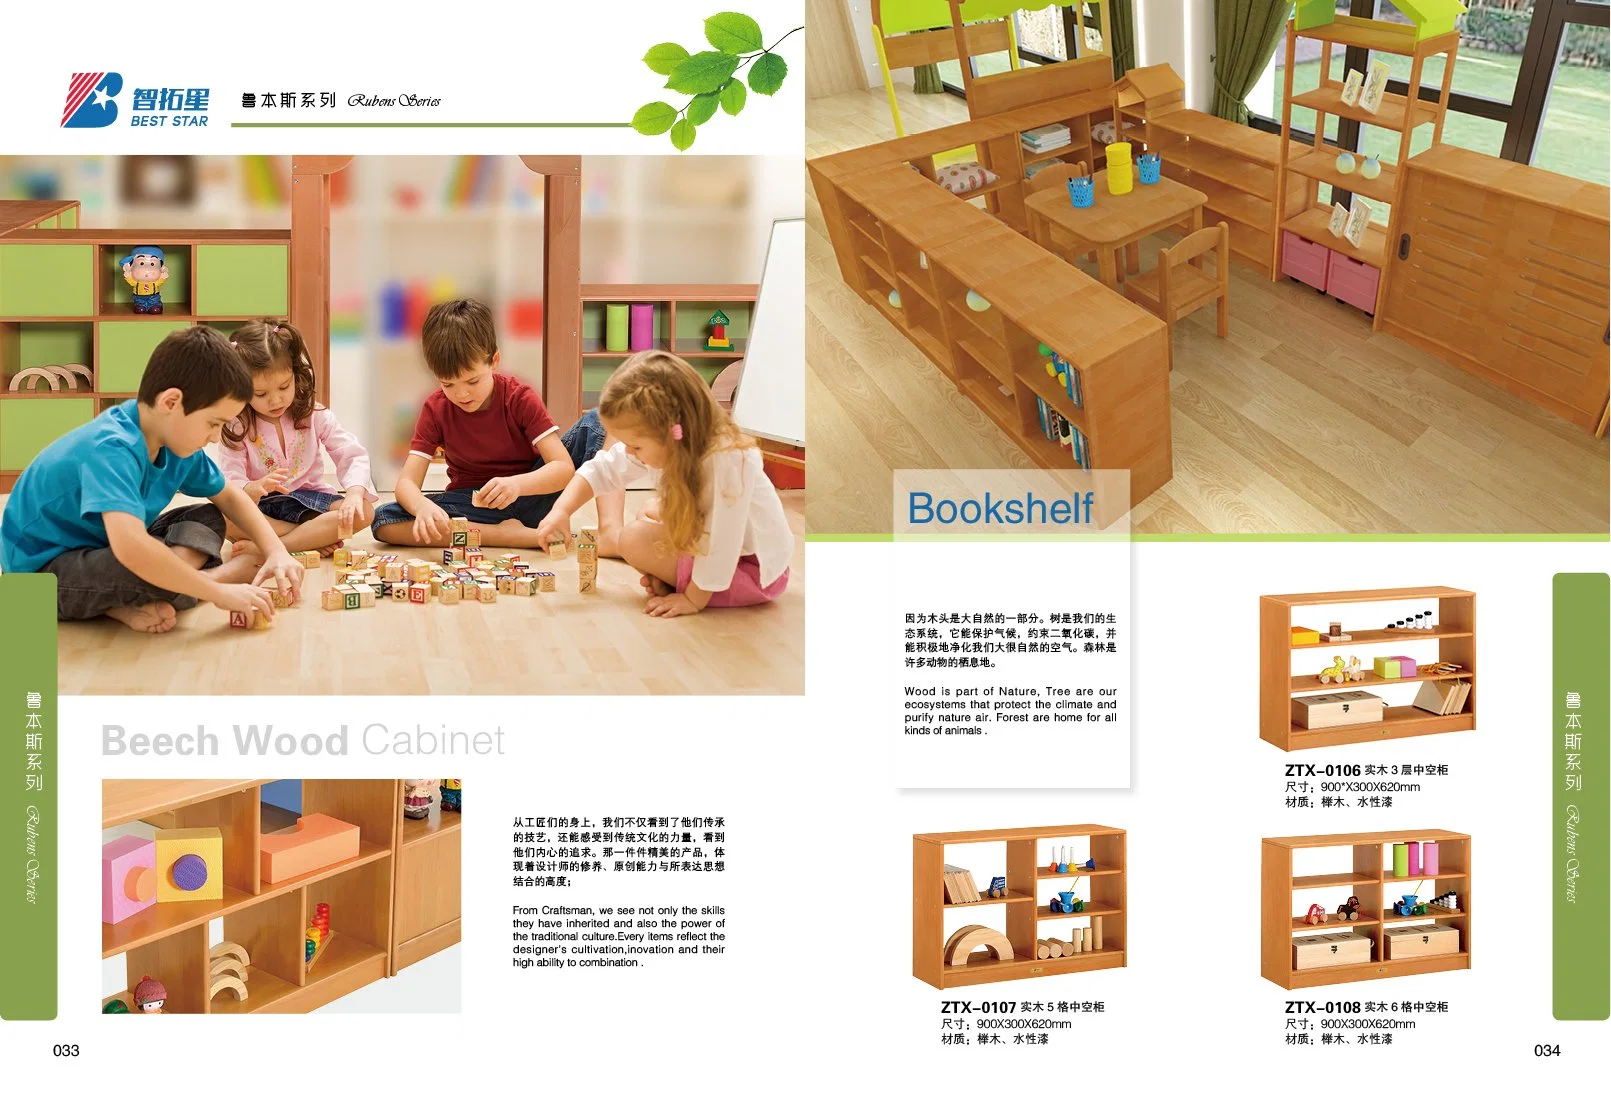 Kindergarten and Preschool Day Care Furniture, School Classroom Furniture, Children Care Furniture, Nursery Furniture, Kids Wood Furniture, Baby Room Furniture